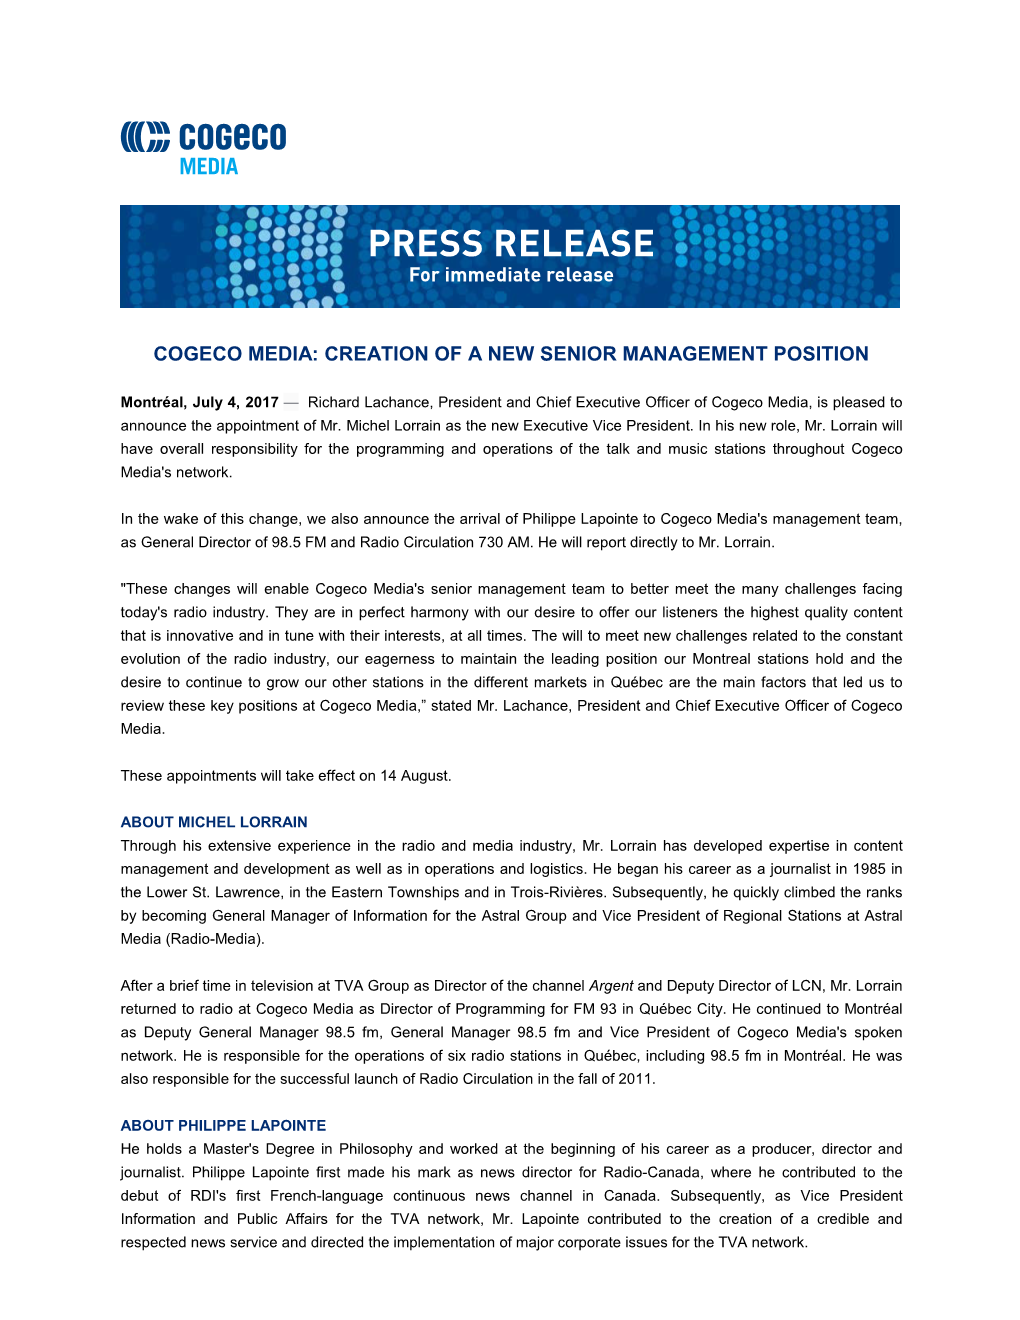 CMI Creation New Position Upper Management Pressrelease